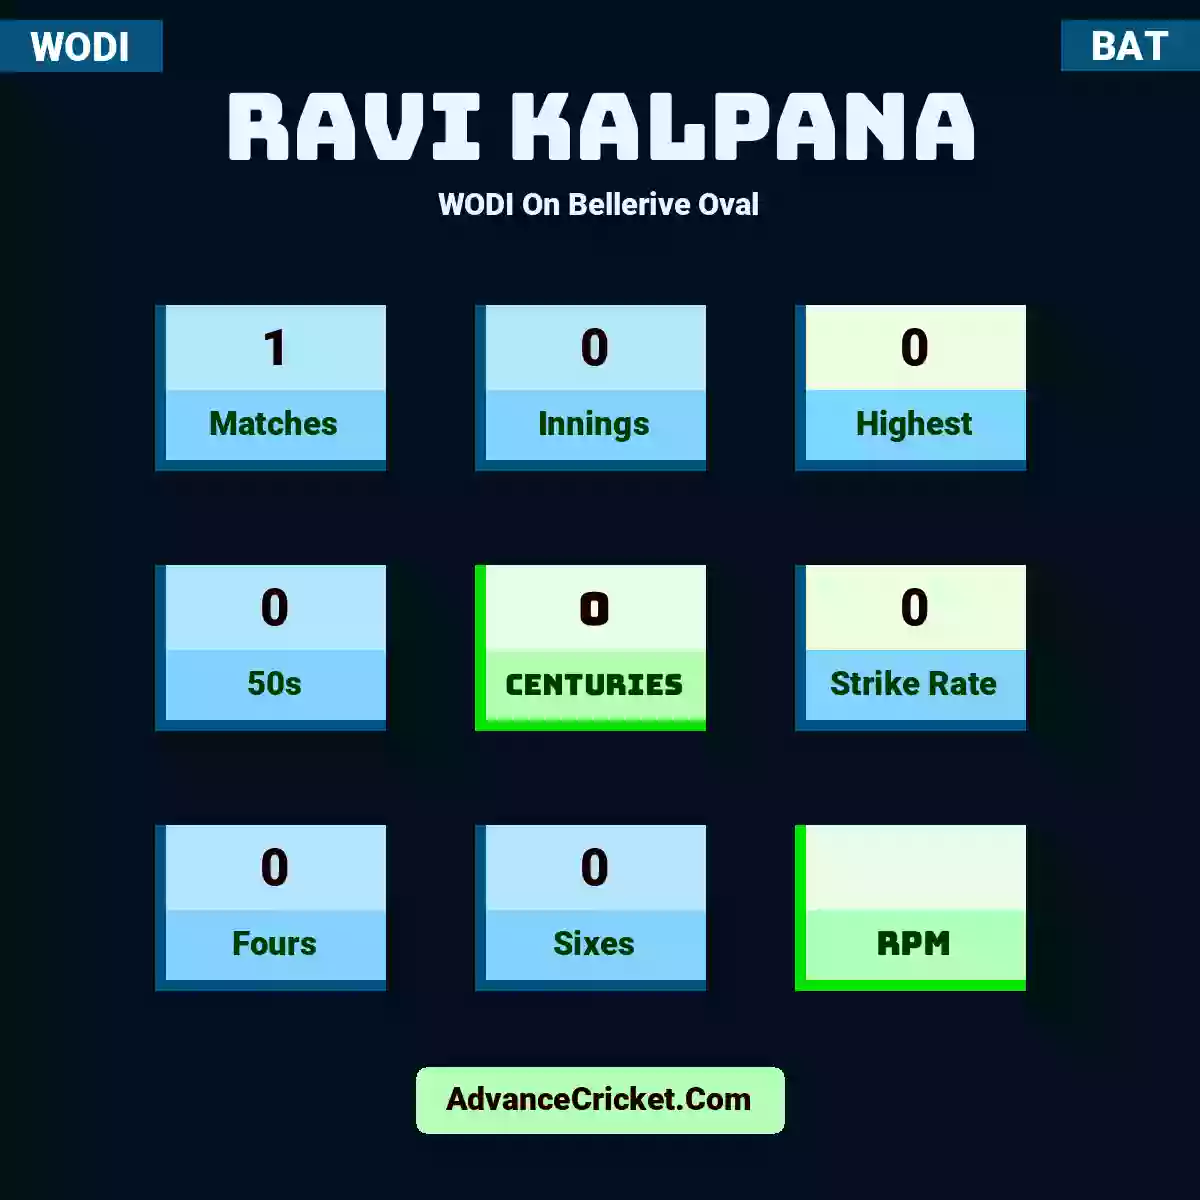 Ravi Kalpana WODI  On Bellerive Oval, Ravi Kalpana played 1 matches, scored 0 runs as highest, 0 half-centuries, and 0 centuries, with a strike rate of 0. R.Kalpana hit 0 fours and 0 sixes.